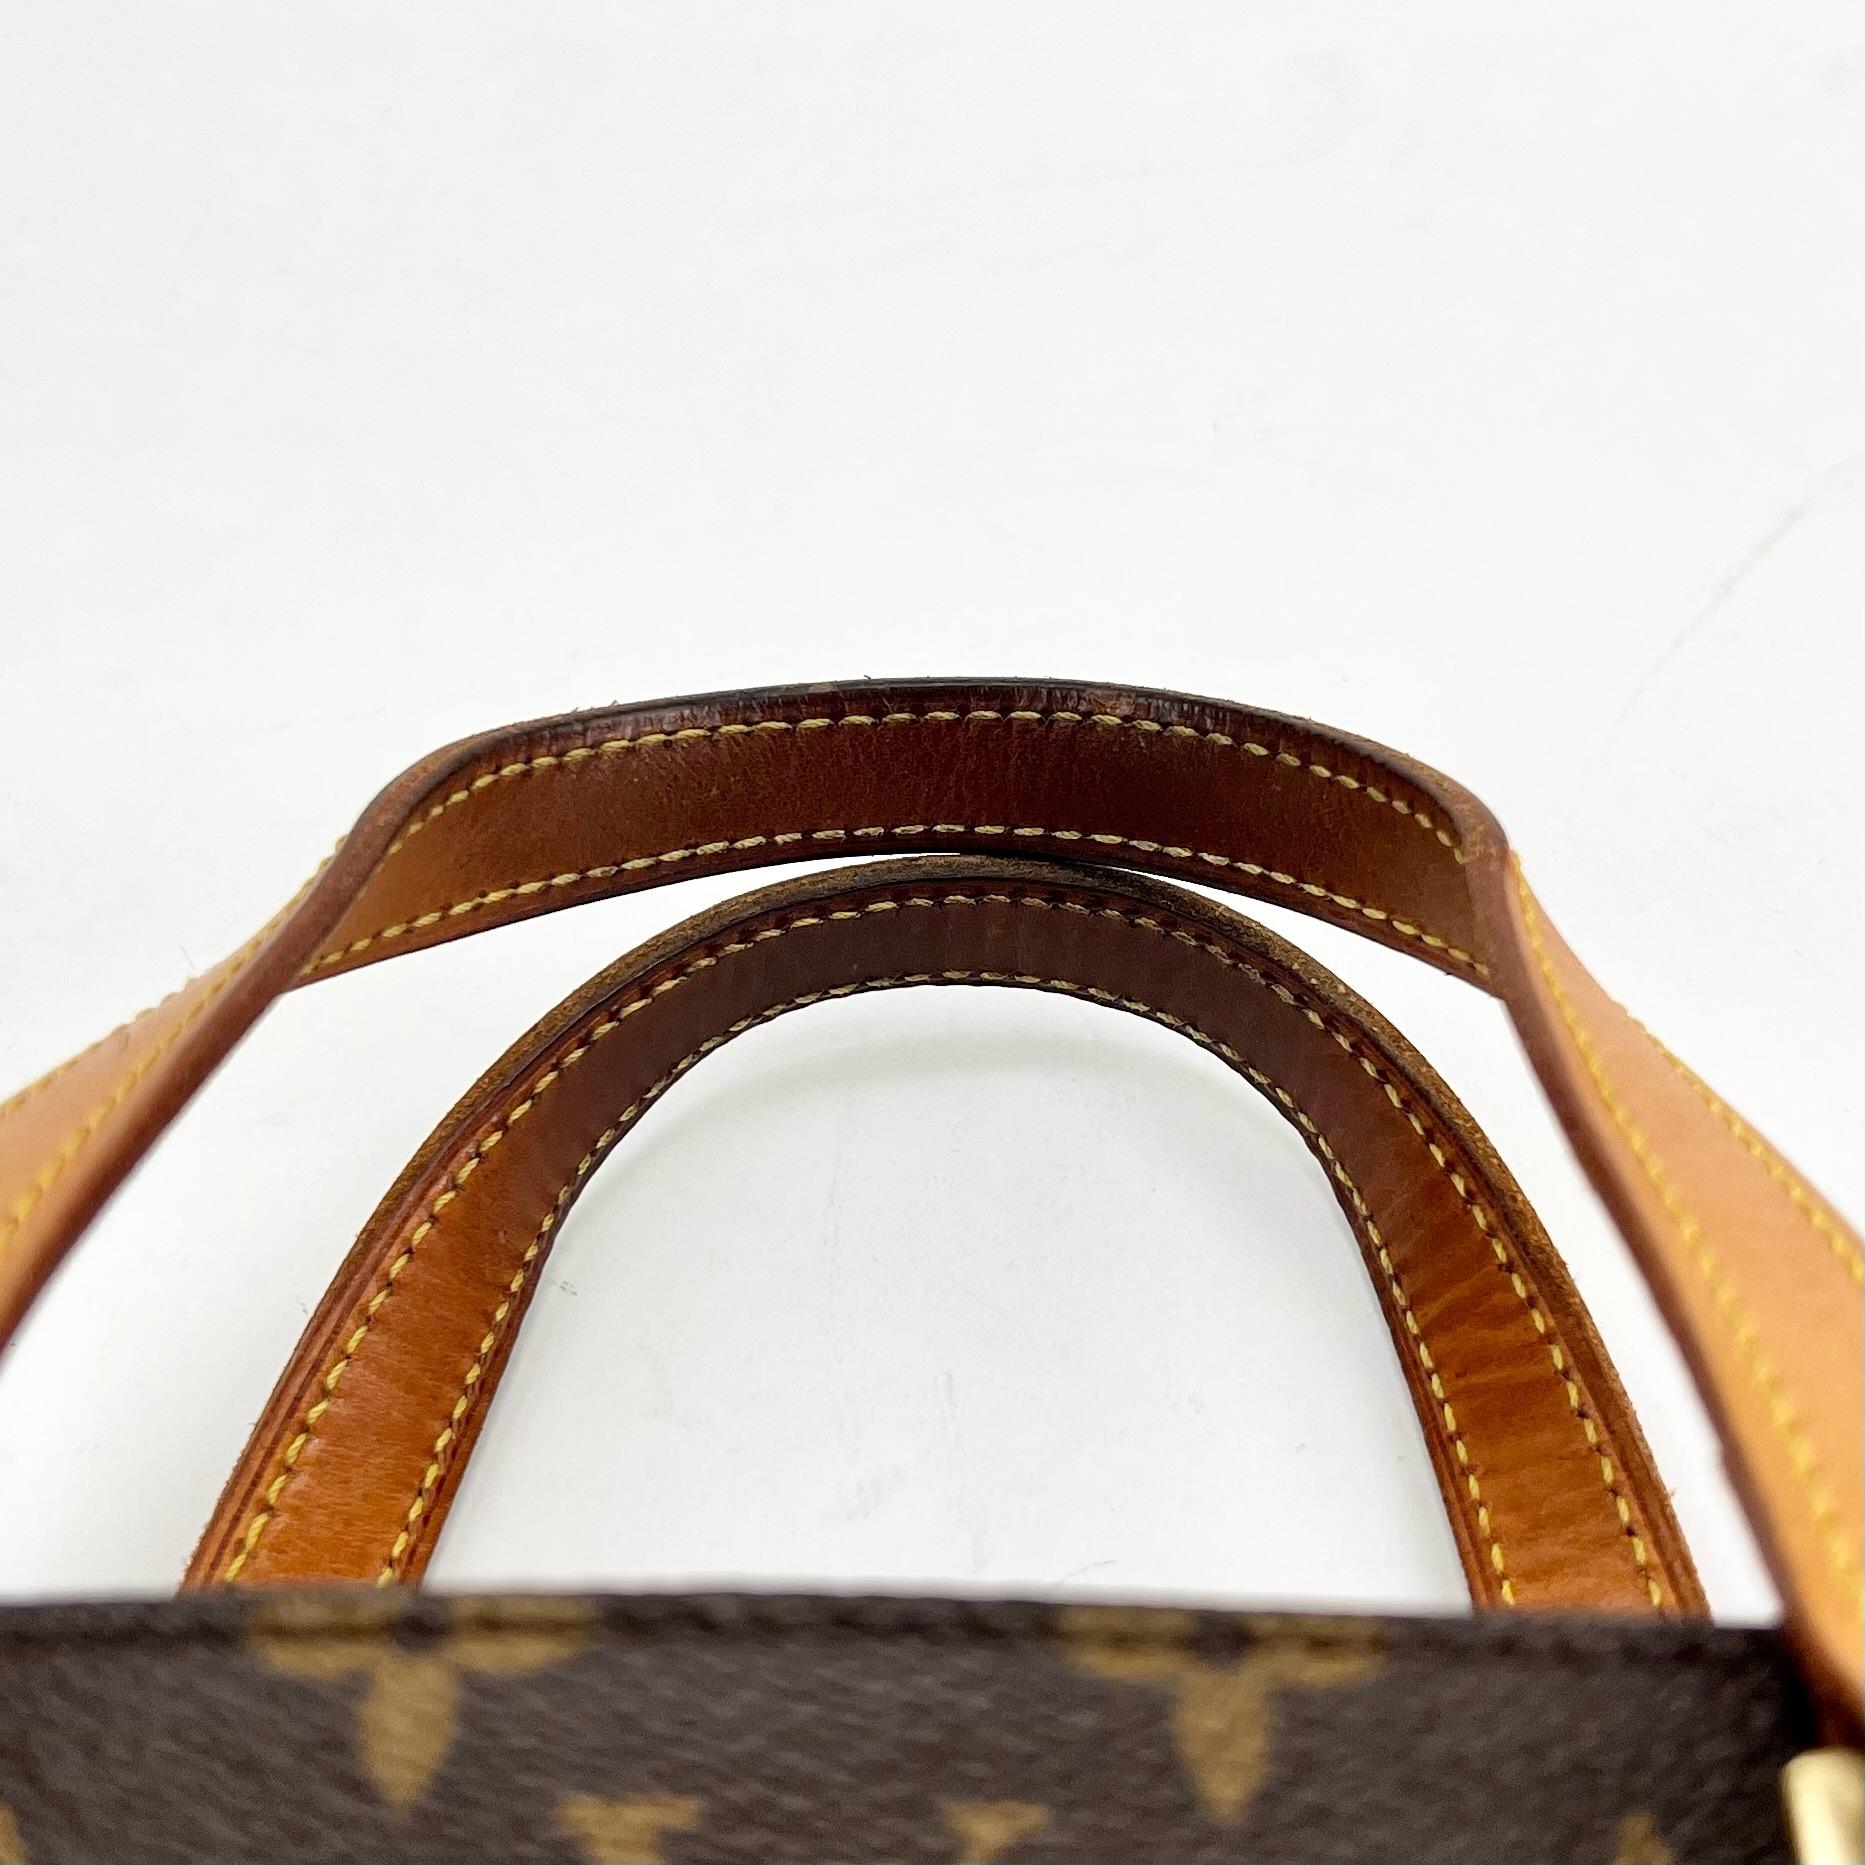 Louis Vuitton Vavin PM Monogram Handbag Entrupy Authenticated for